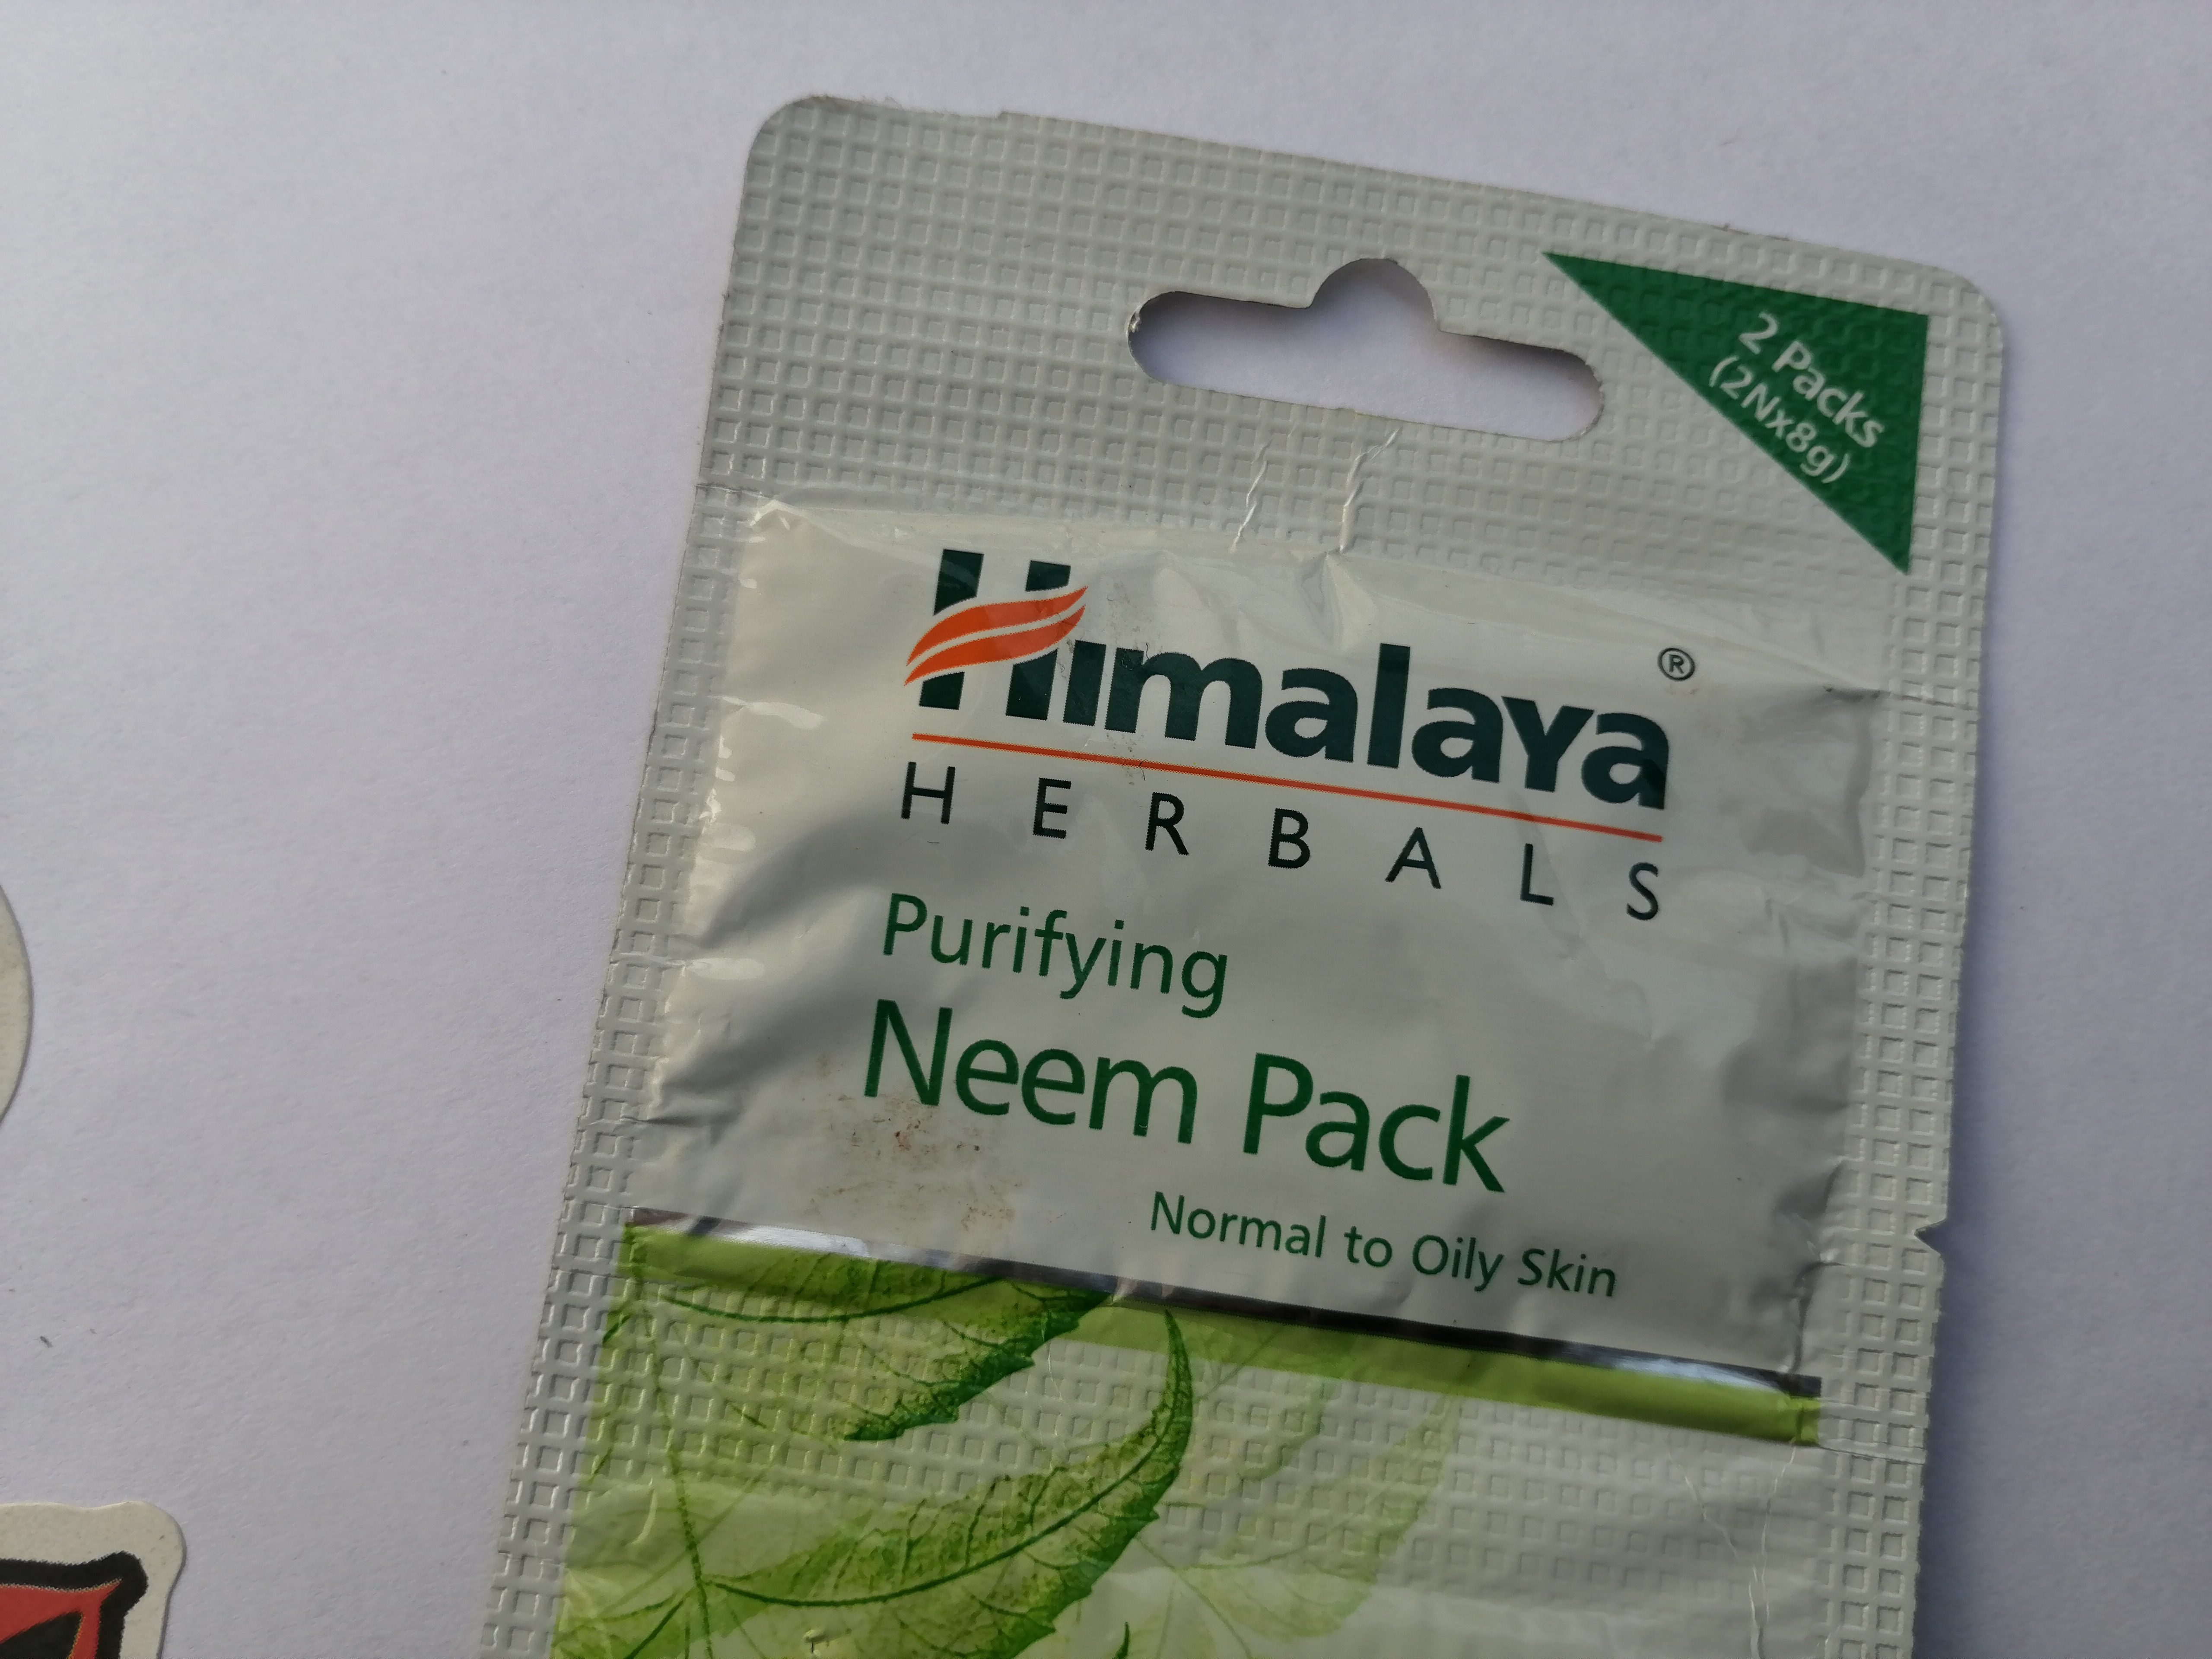 Himalaya Herbals Purifying Neem Pack| Review